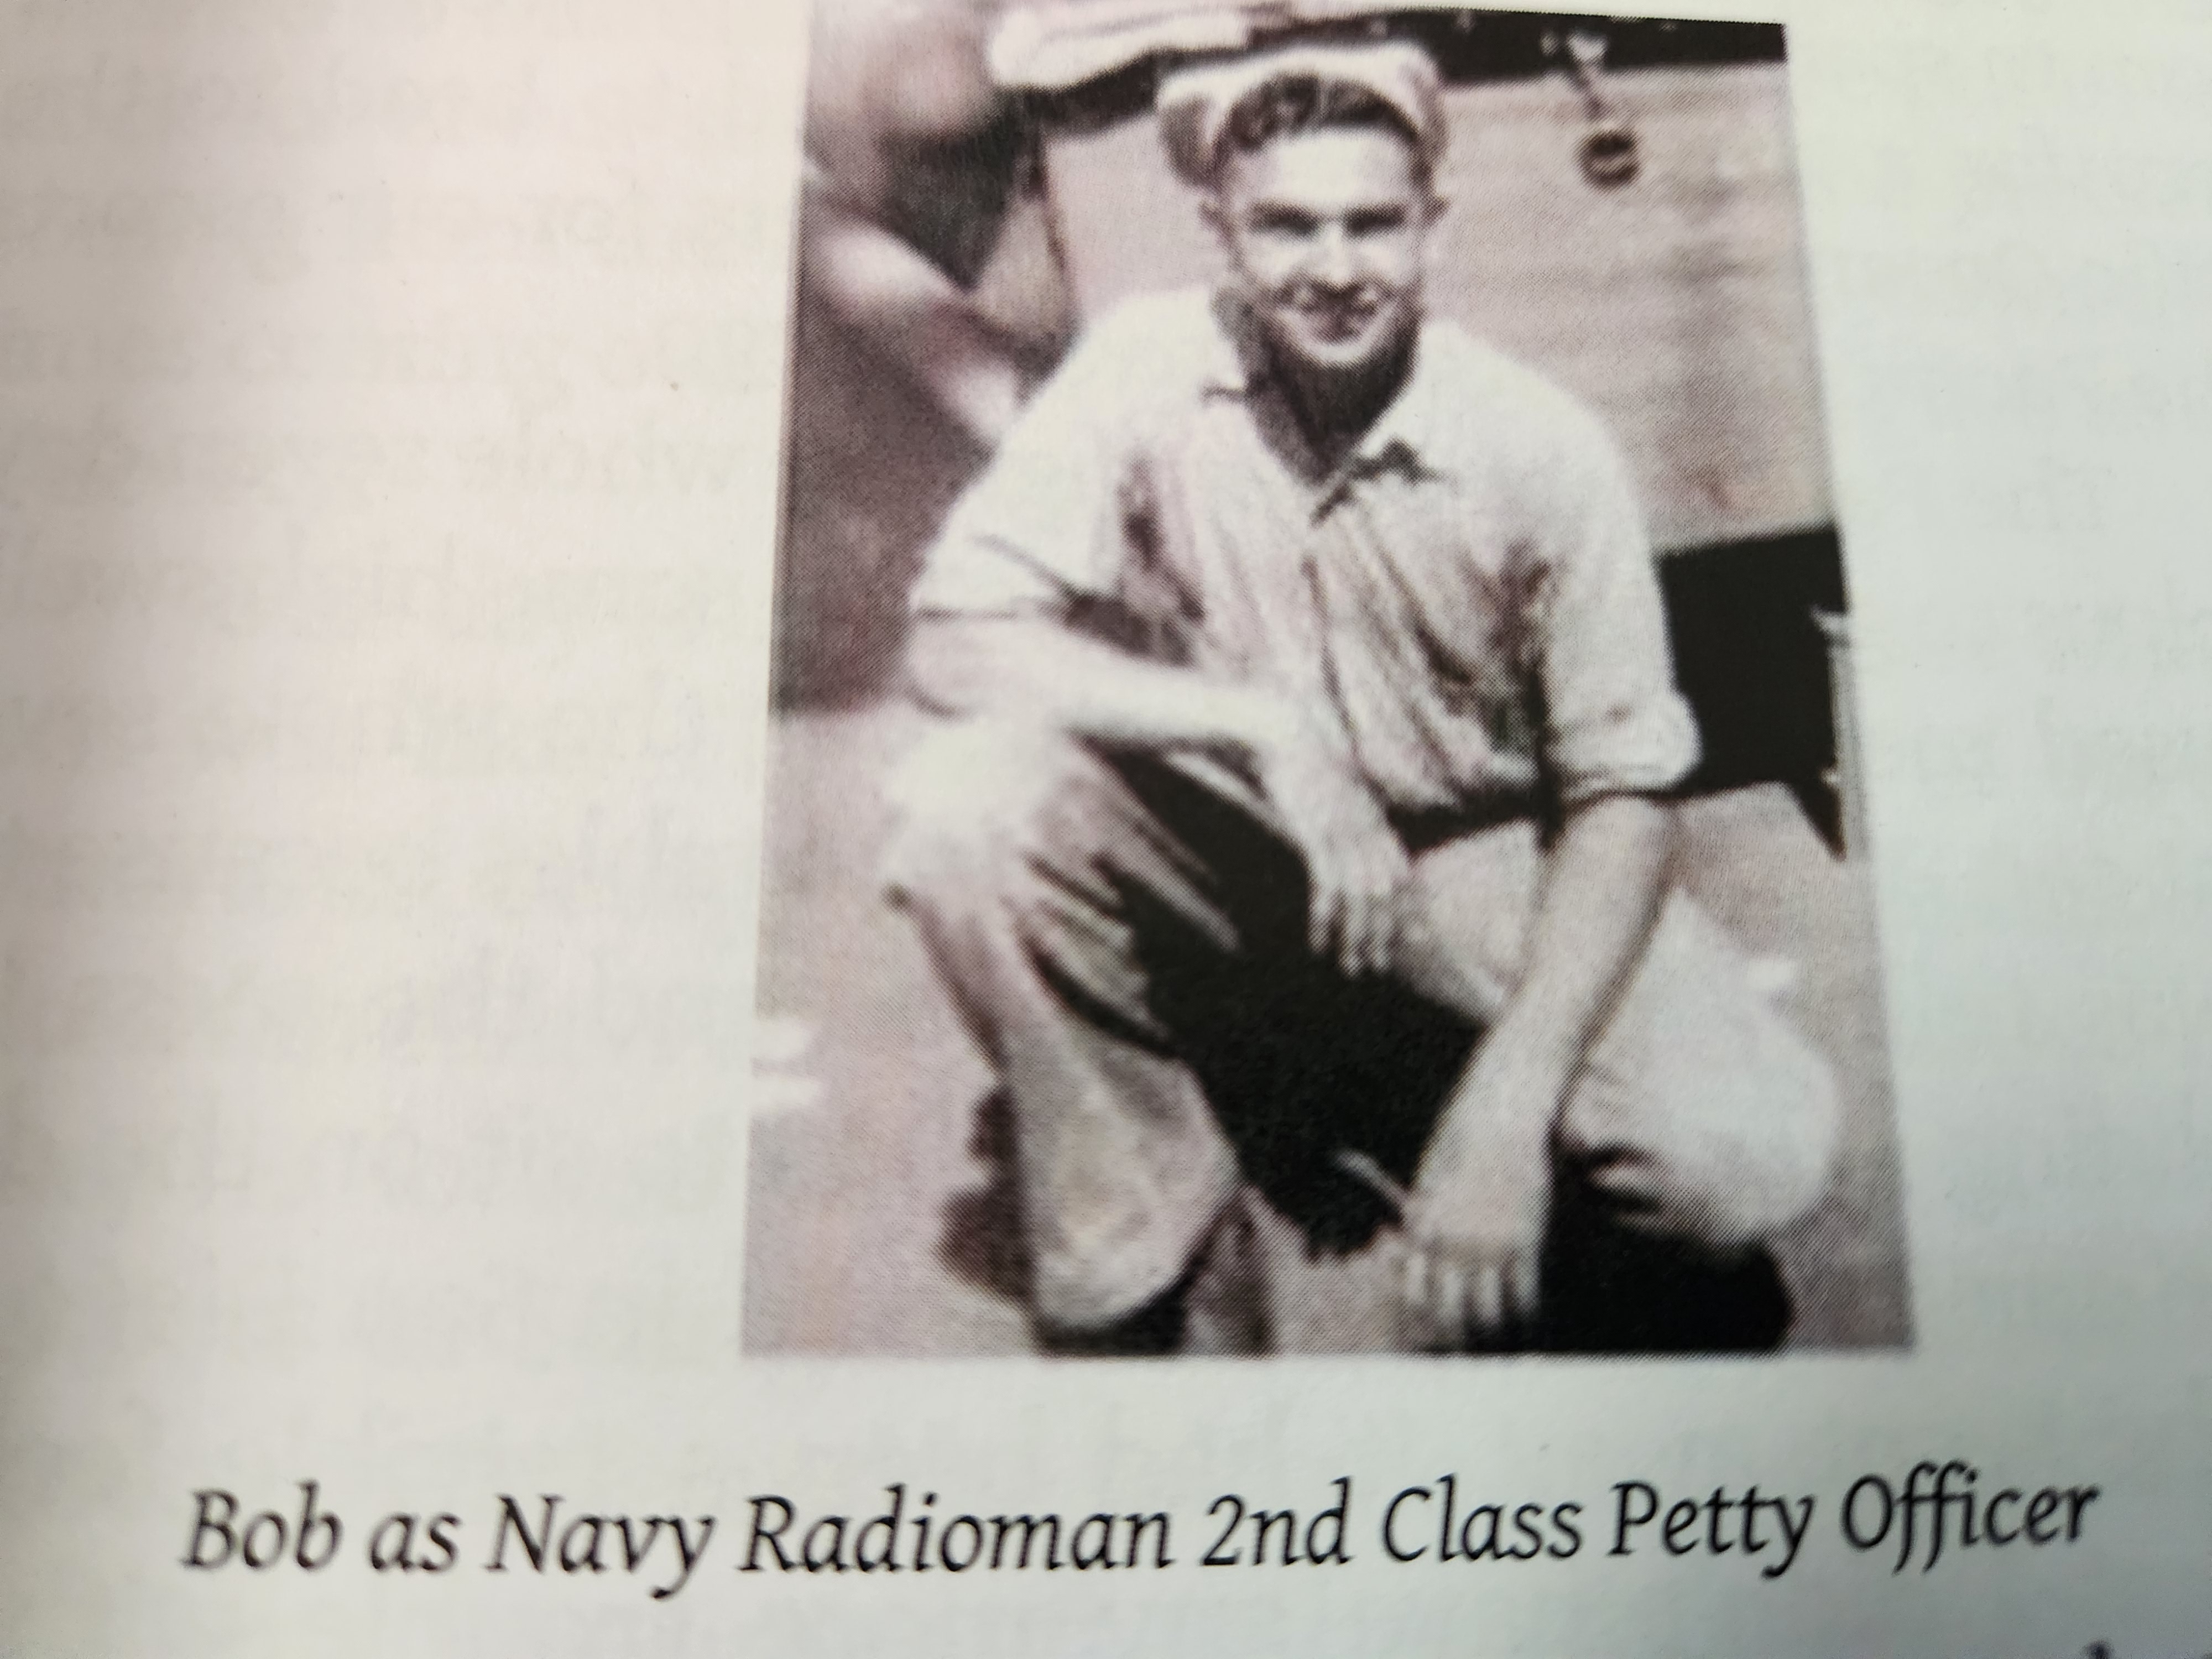 Black and white photo of Bob Persichitti that says "Bob as Navy Radioman 2nd Class Petty Officer."